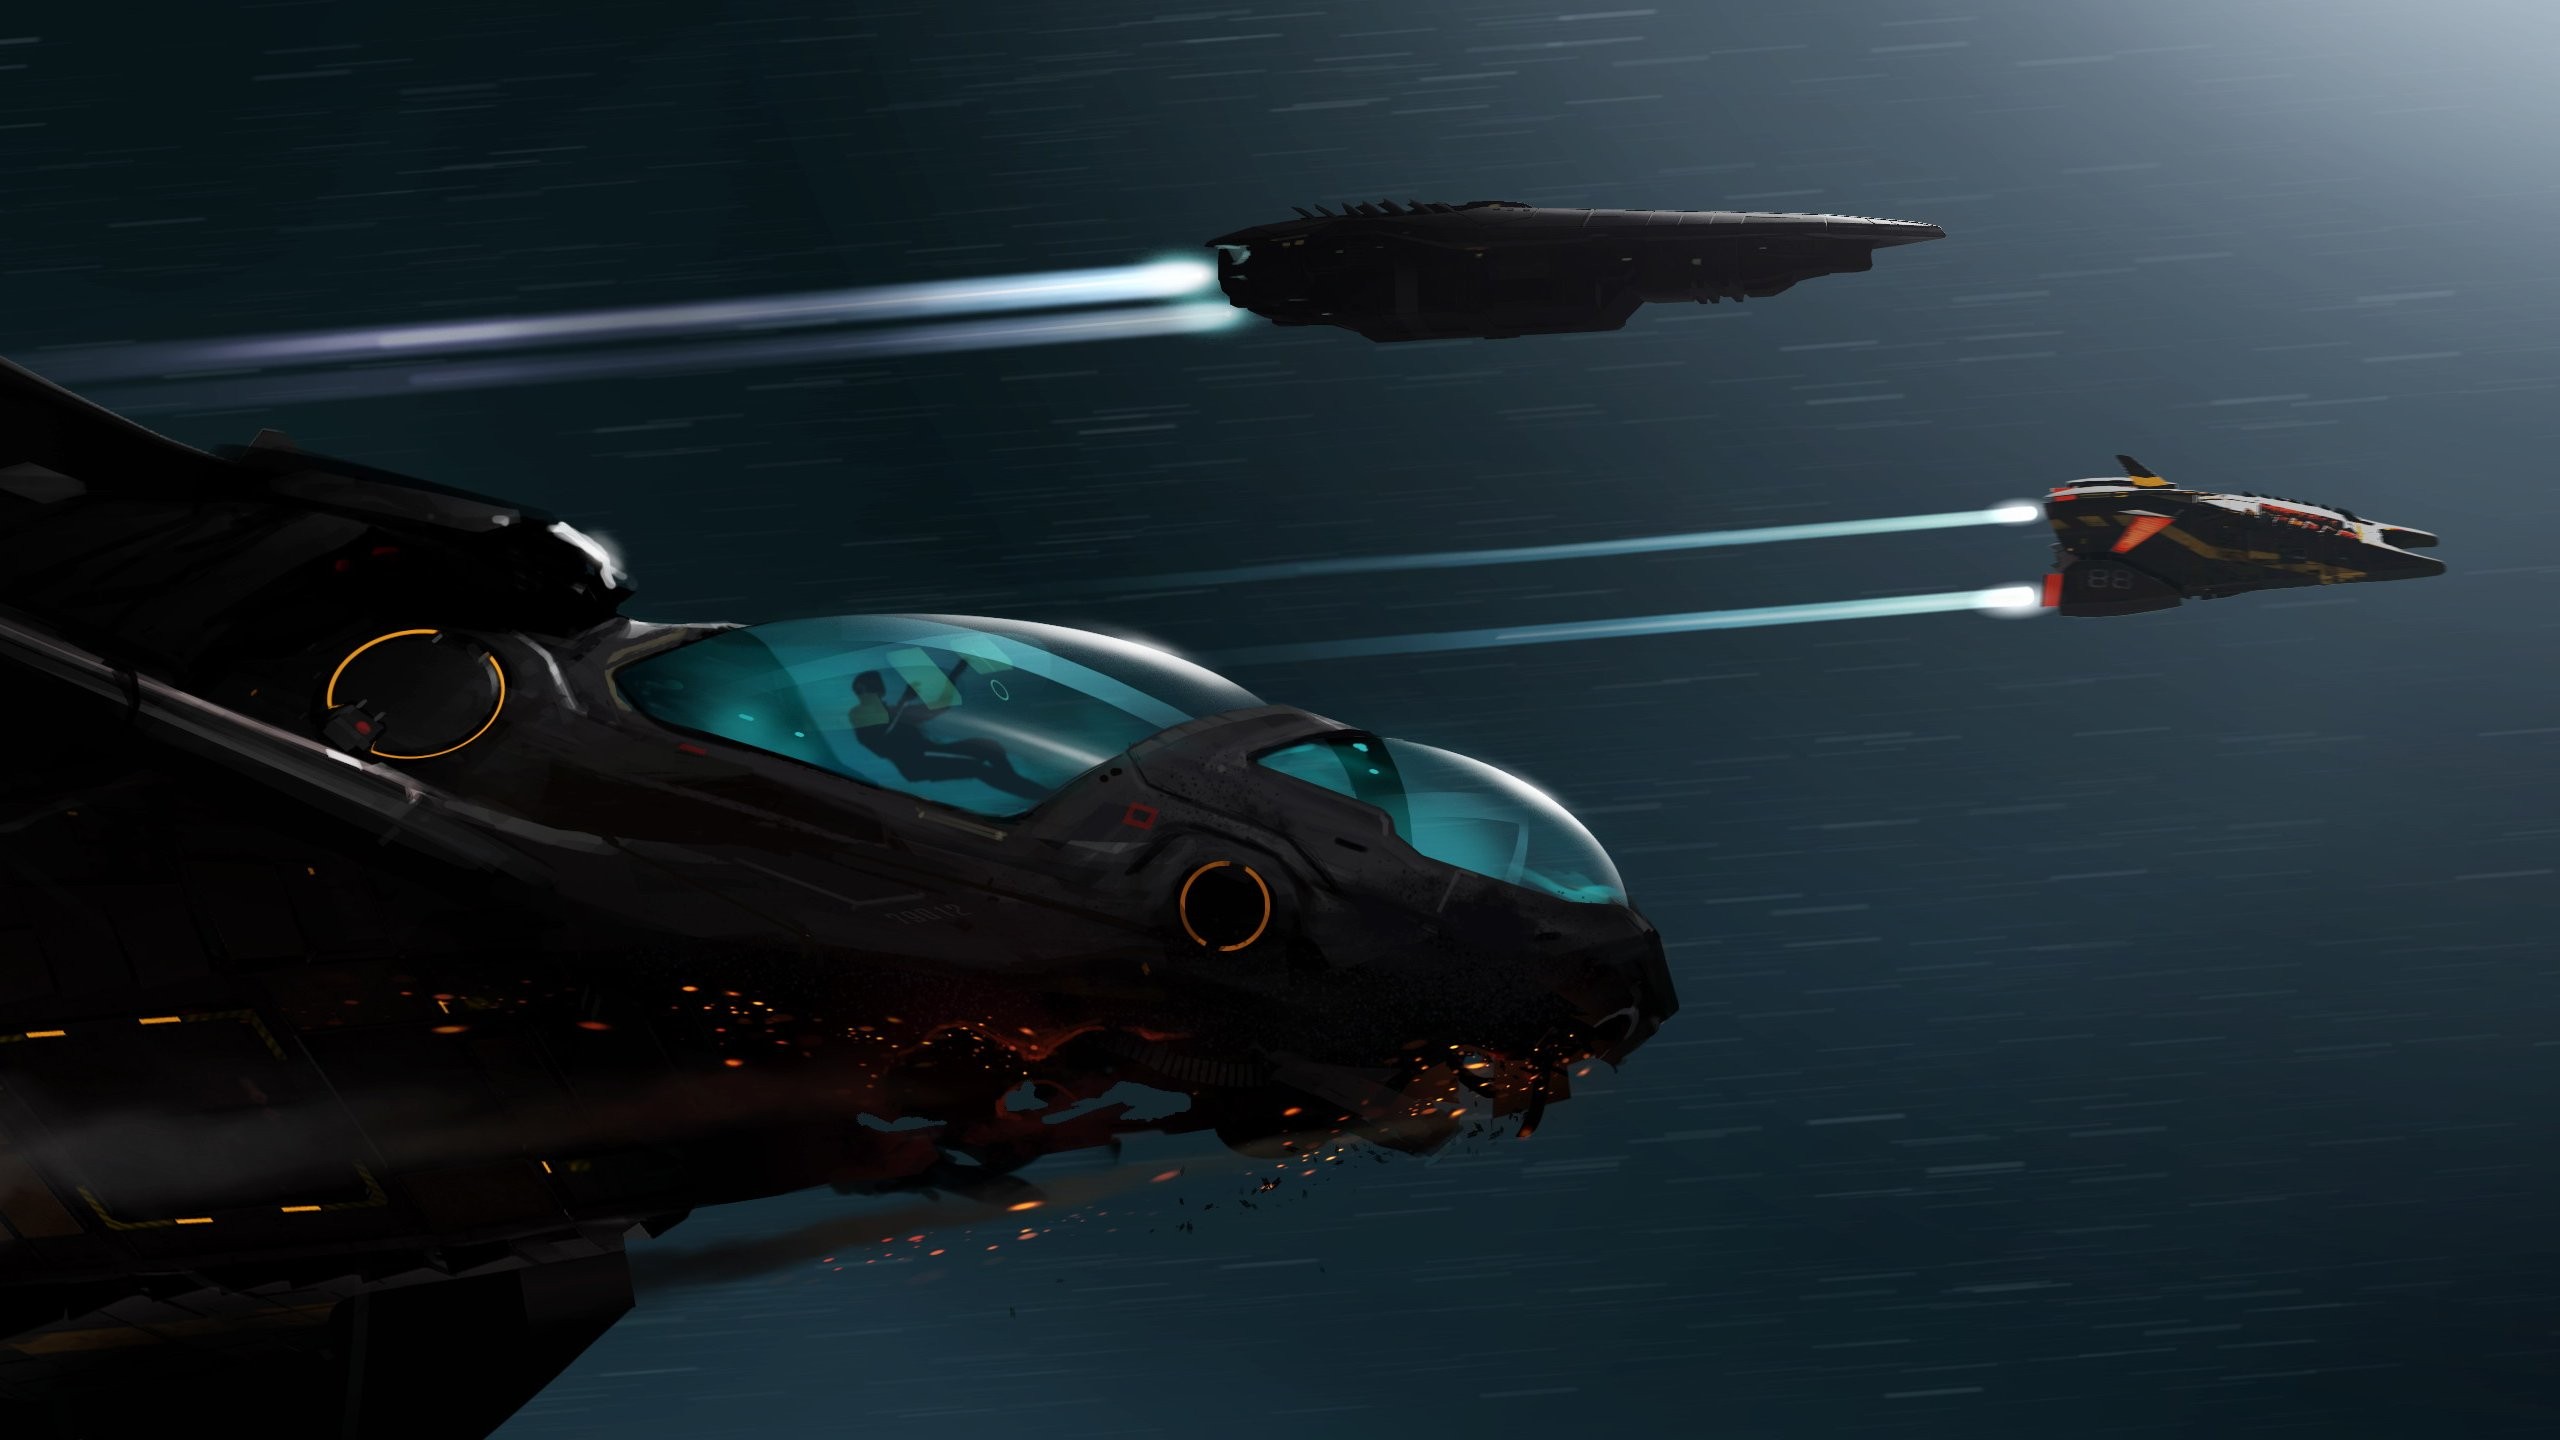 General 2560x1440 Elite: Dangerous spaceship PC gaming science fiction